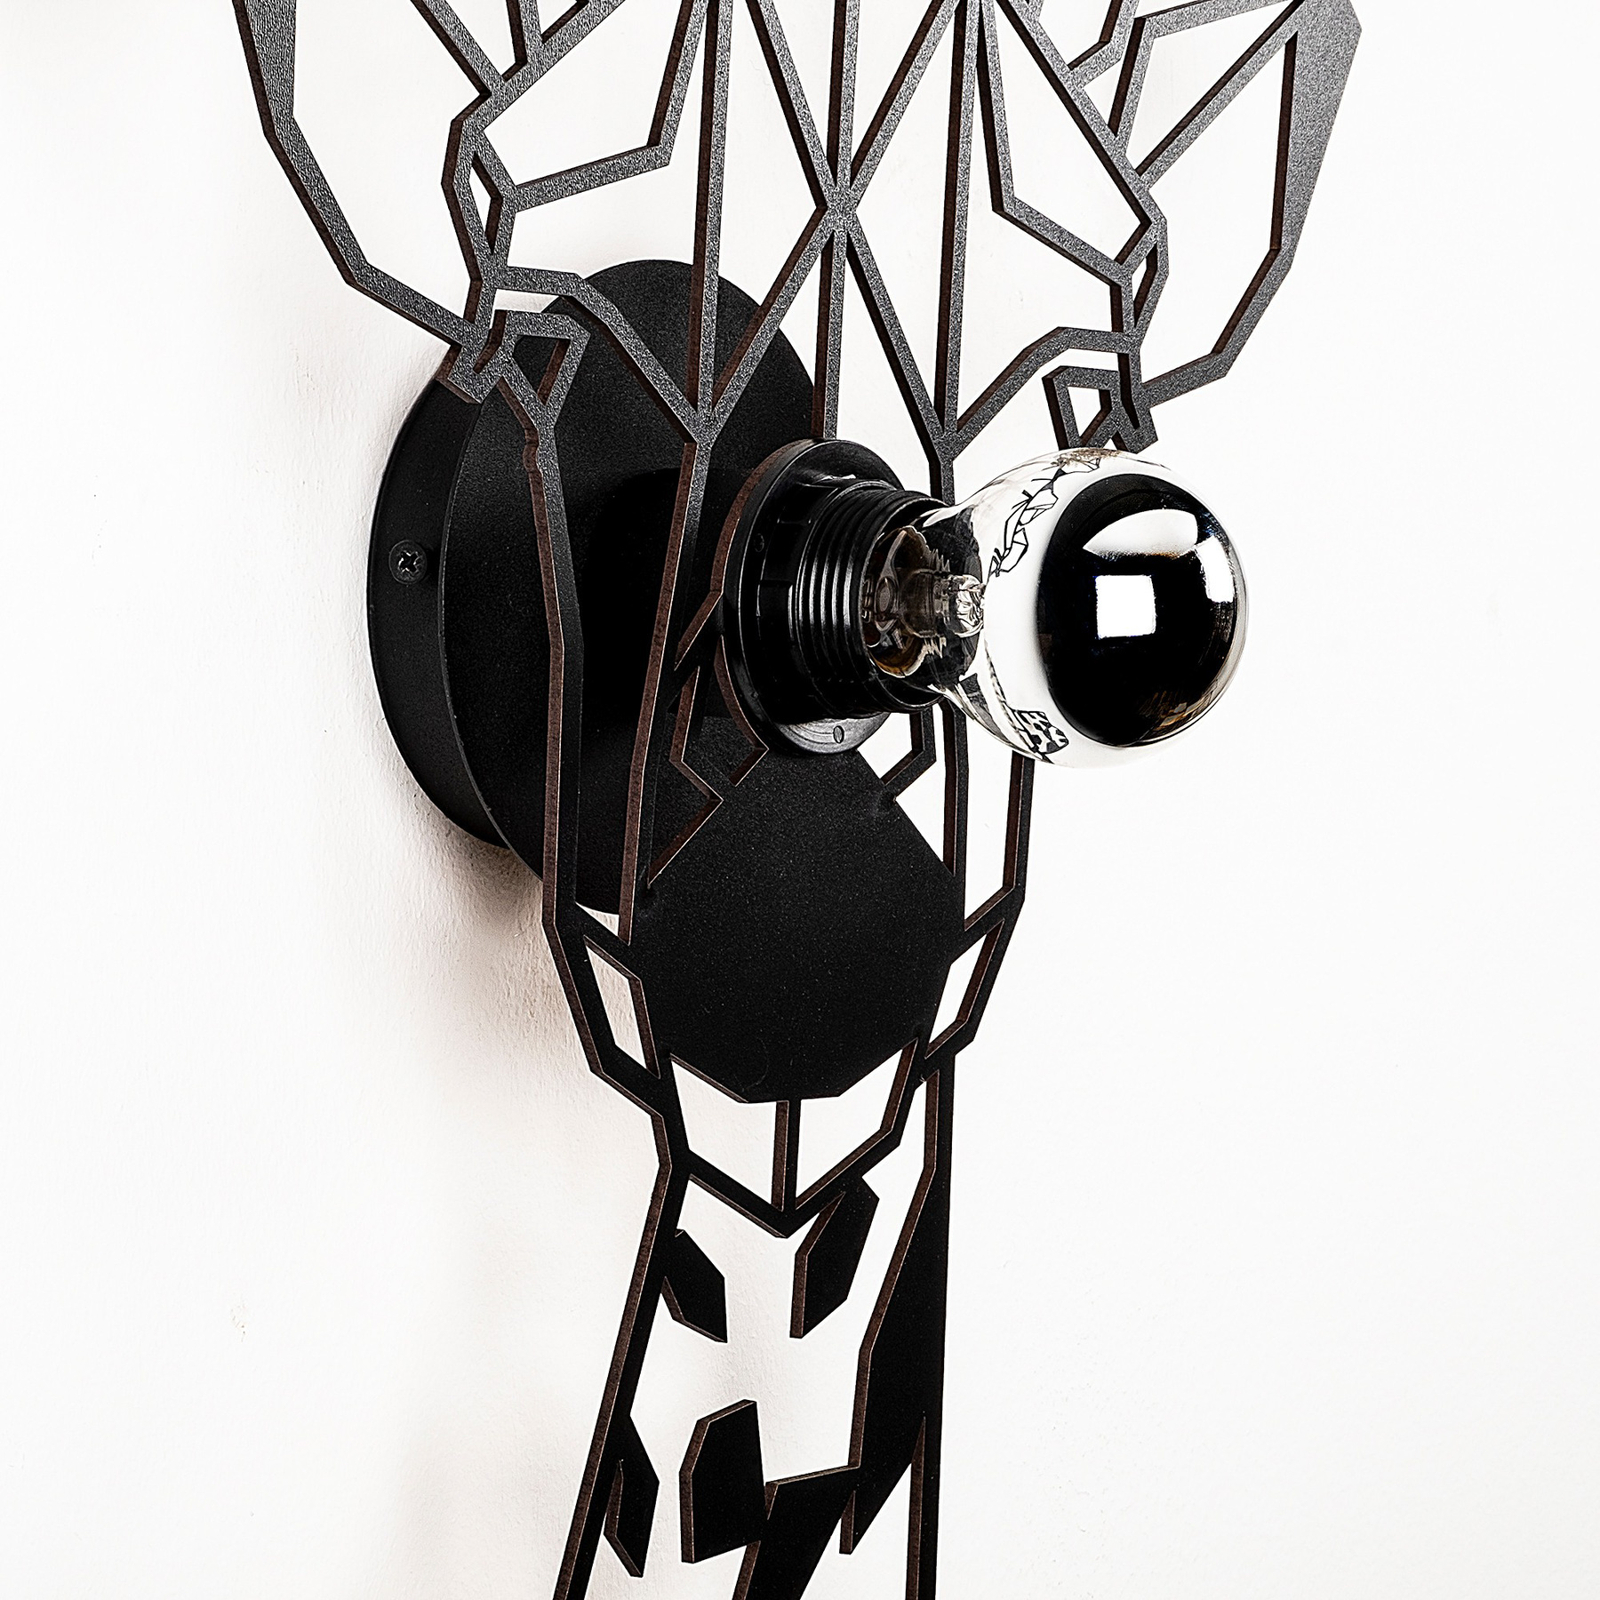 Svetlo W-029, lasercut, dizajn žirafy, čierna